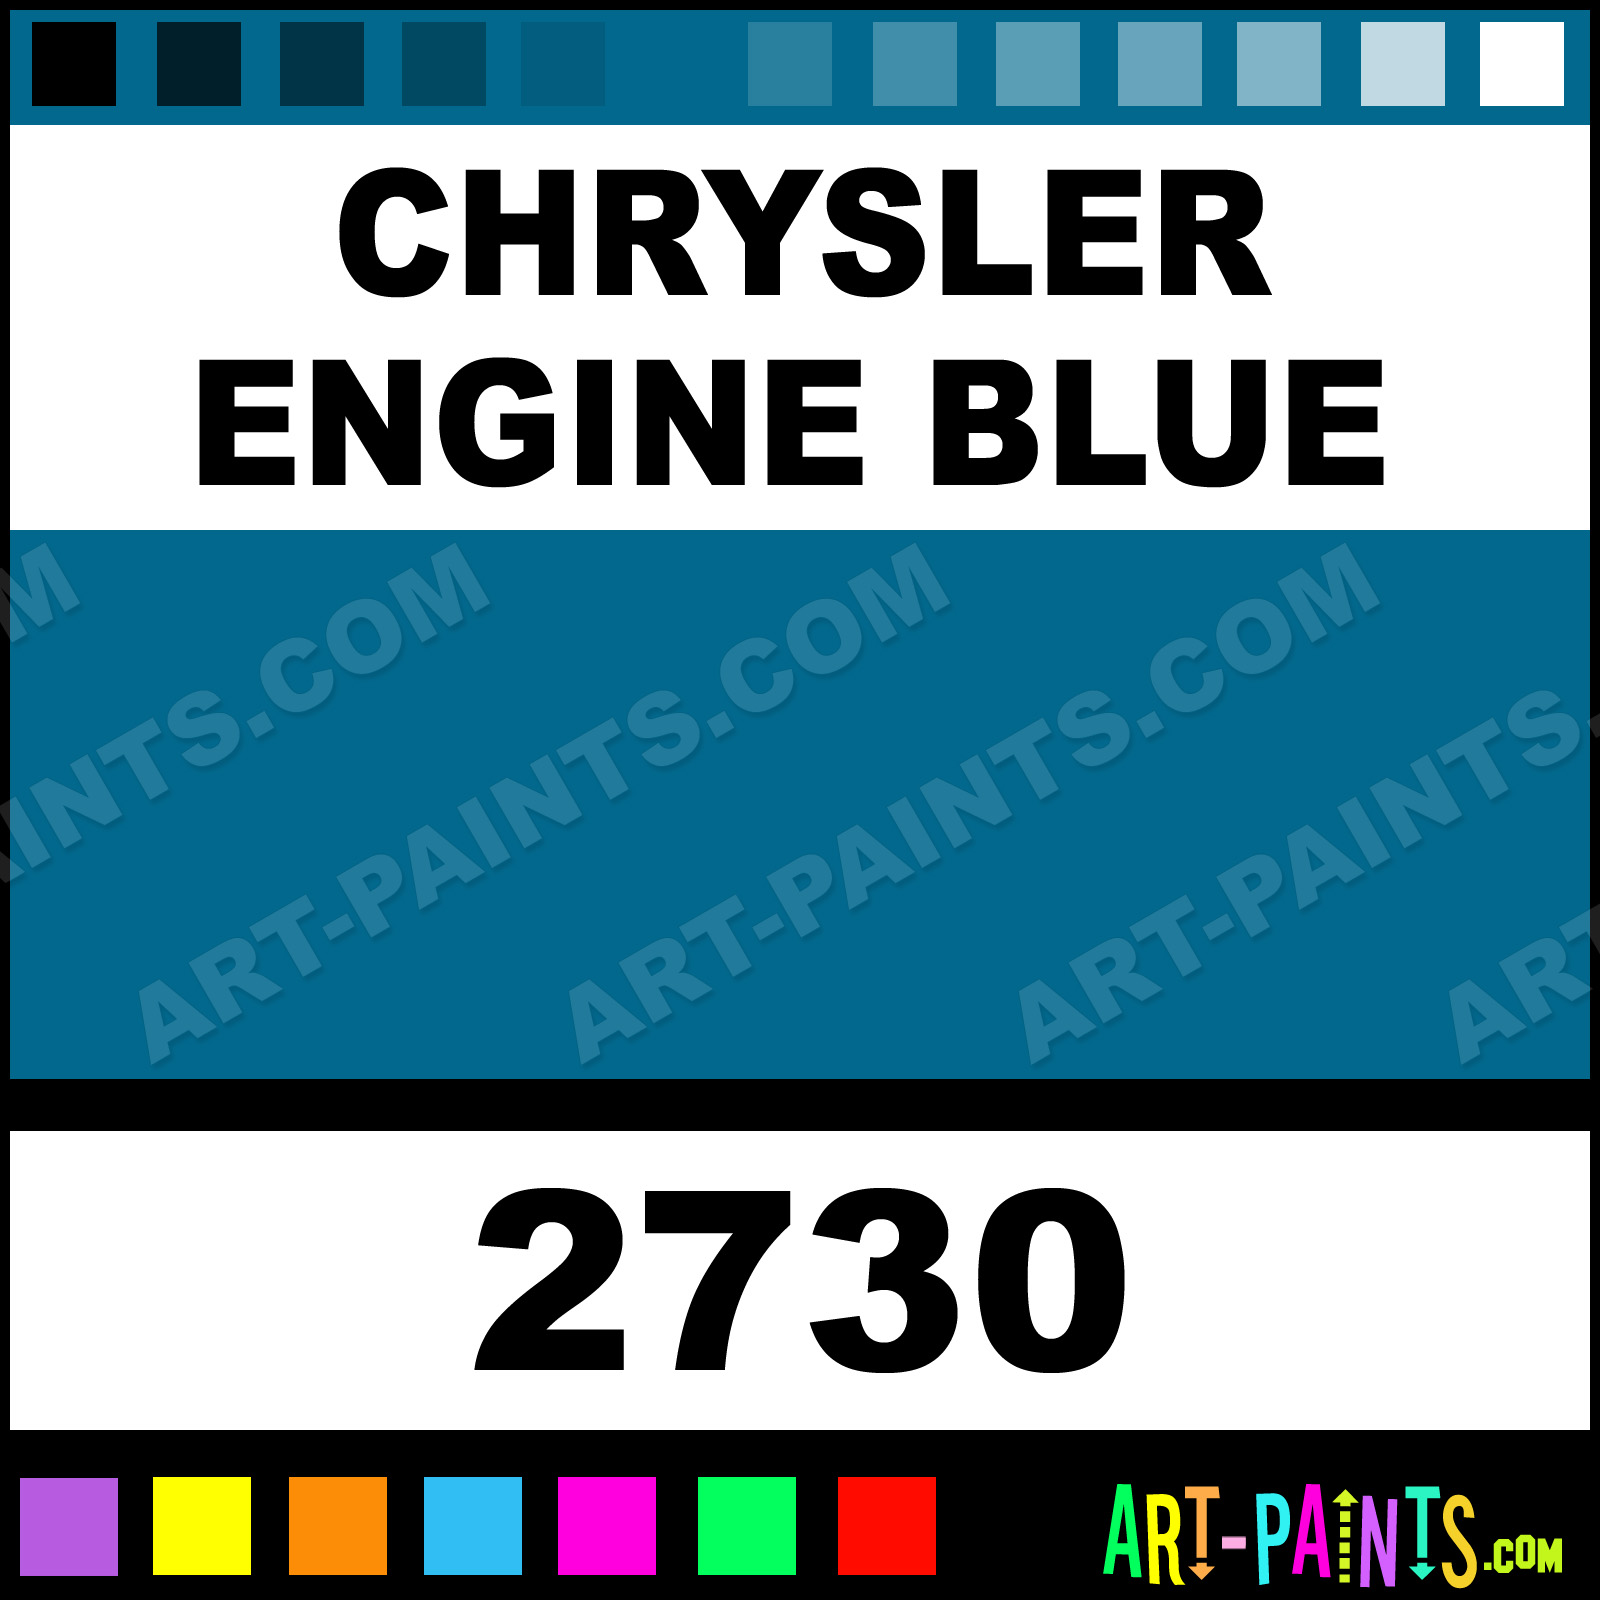 Paint color number for chrysler car #4